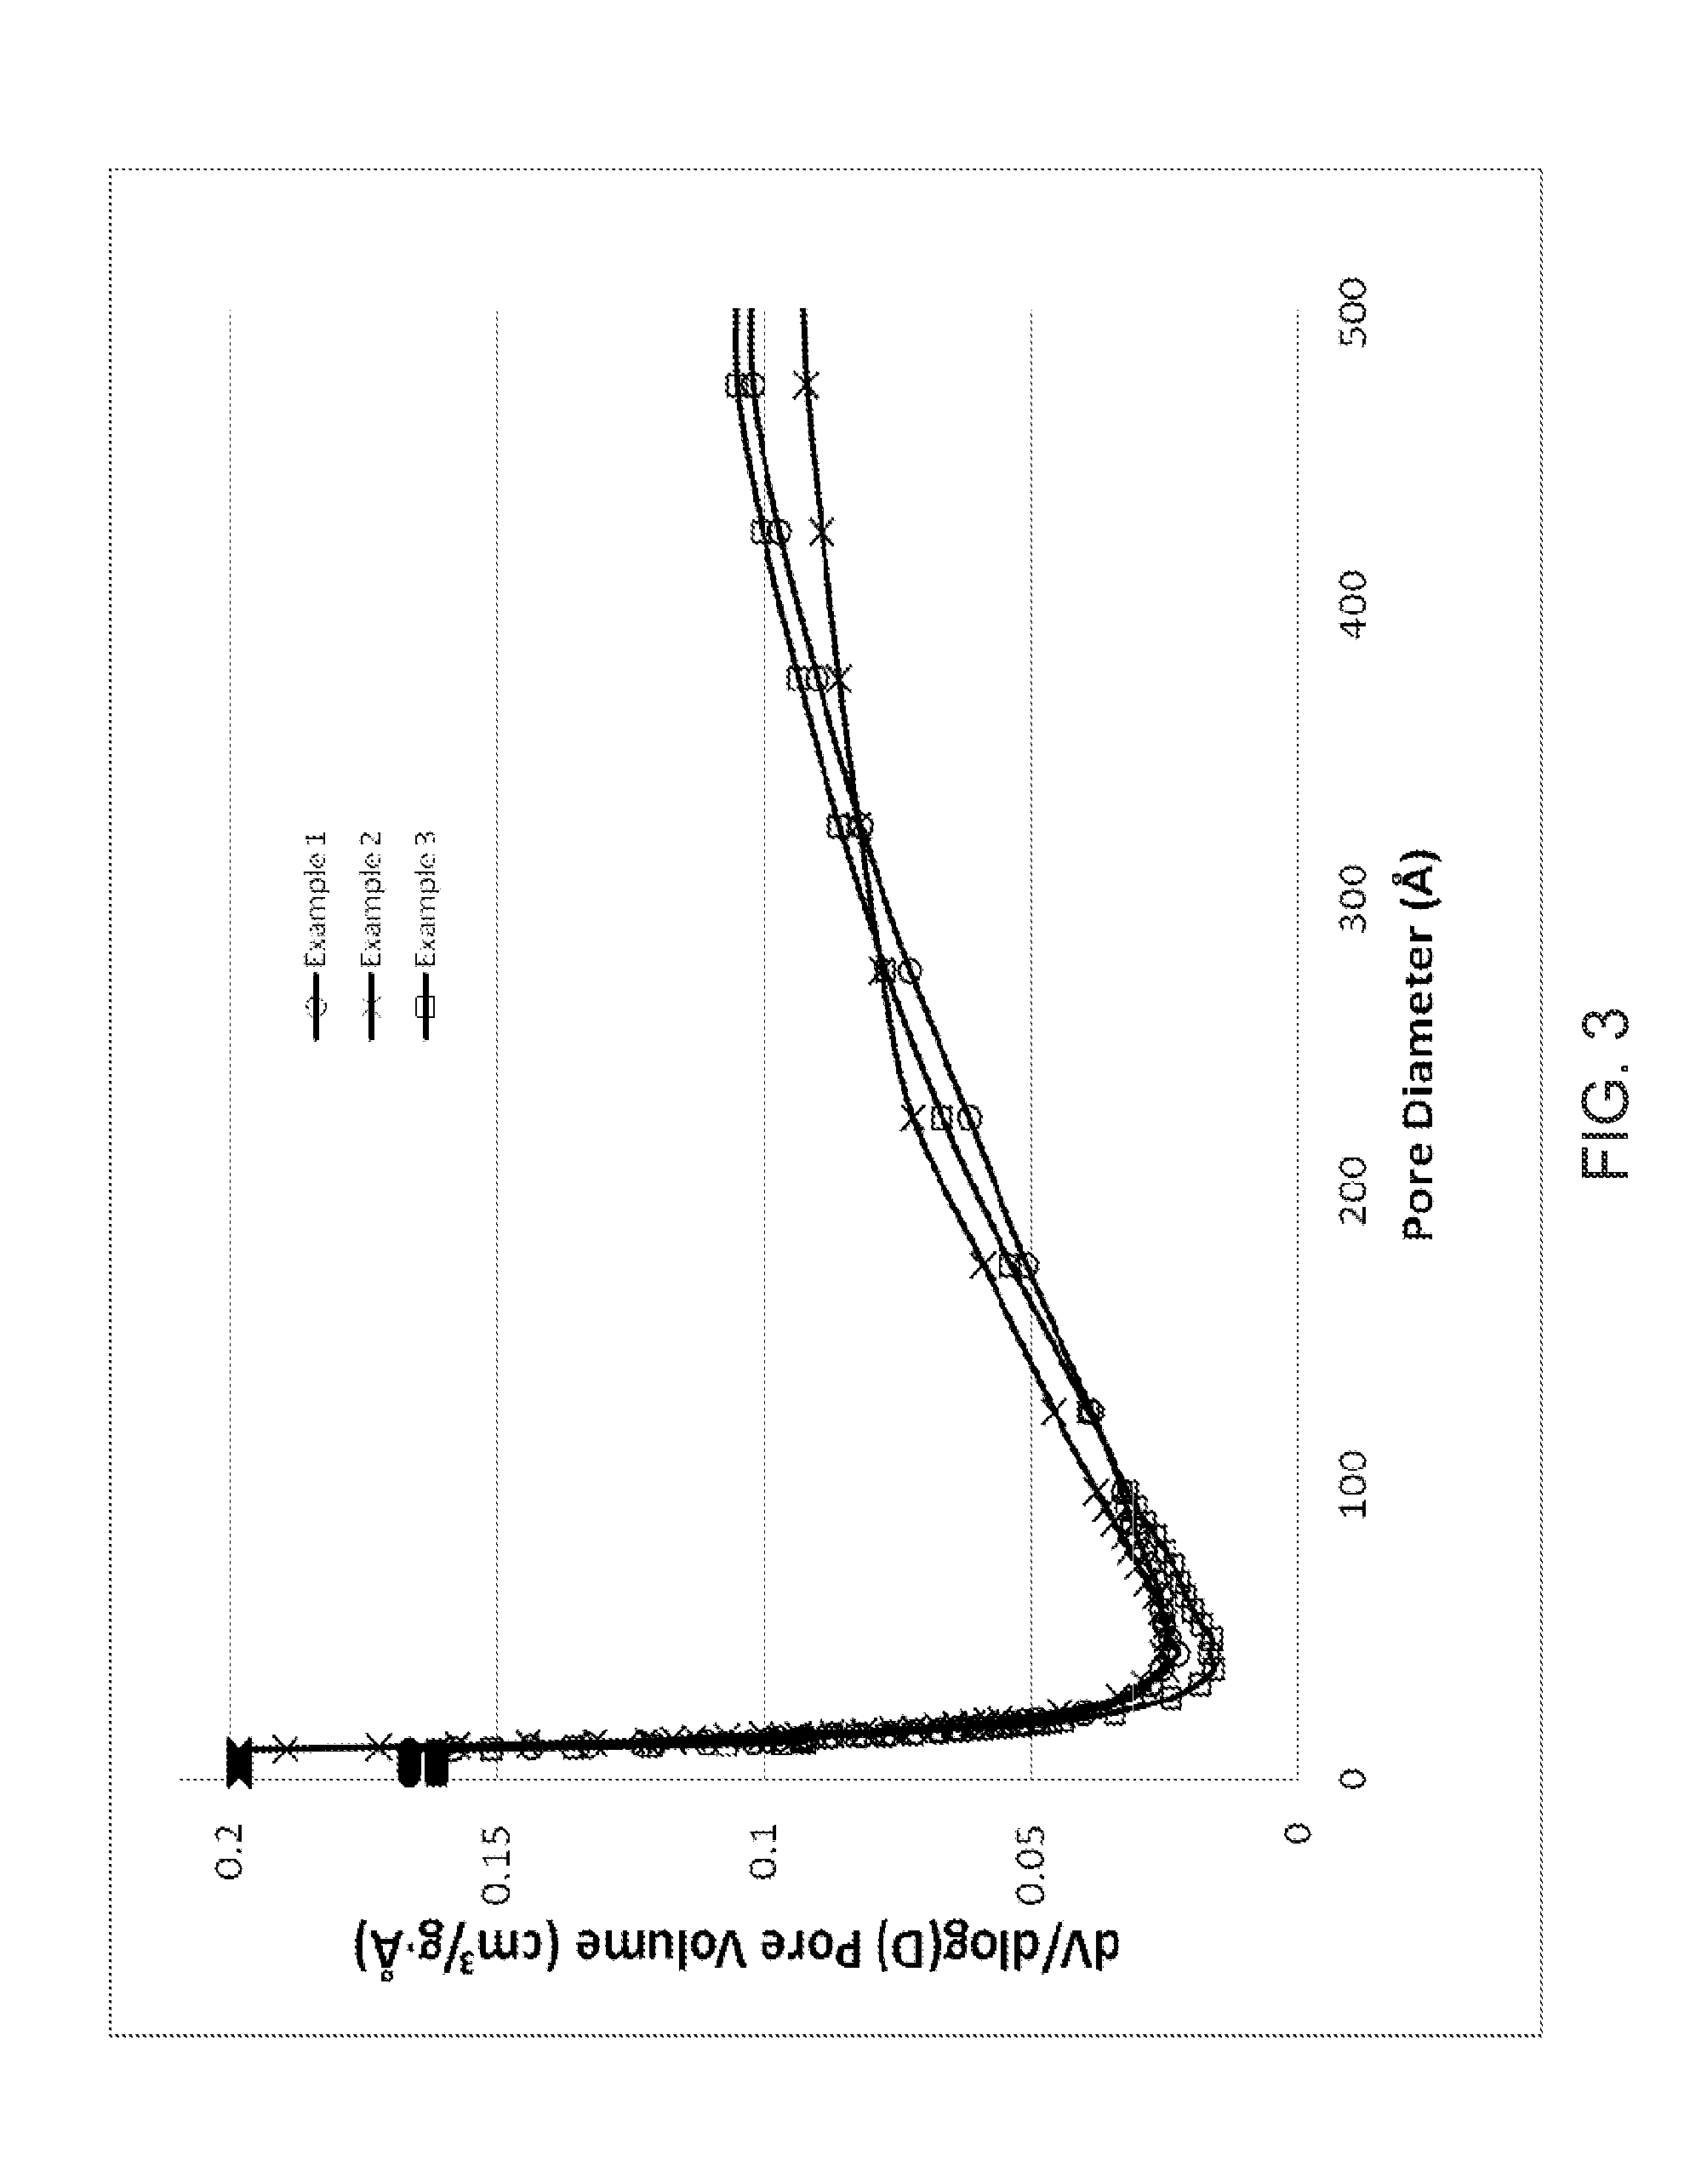 Dehydrocyclodimerization using UZM-44 aluminosilicate zeolite